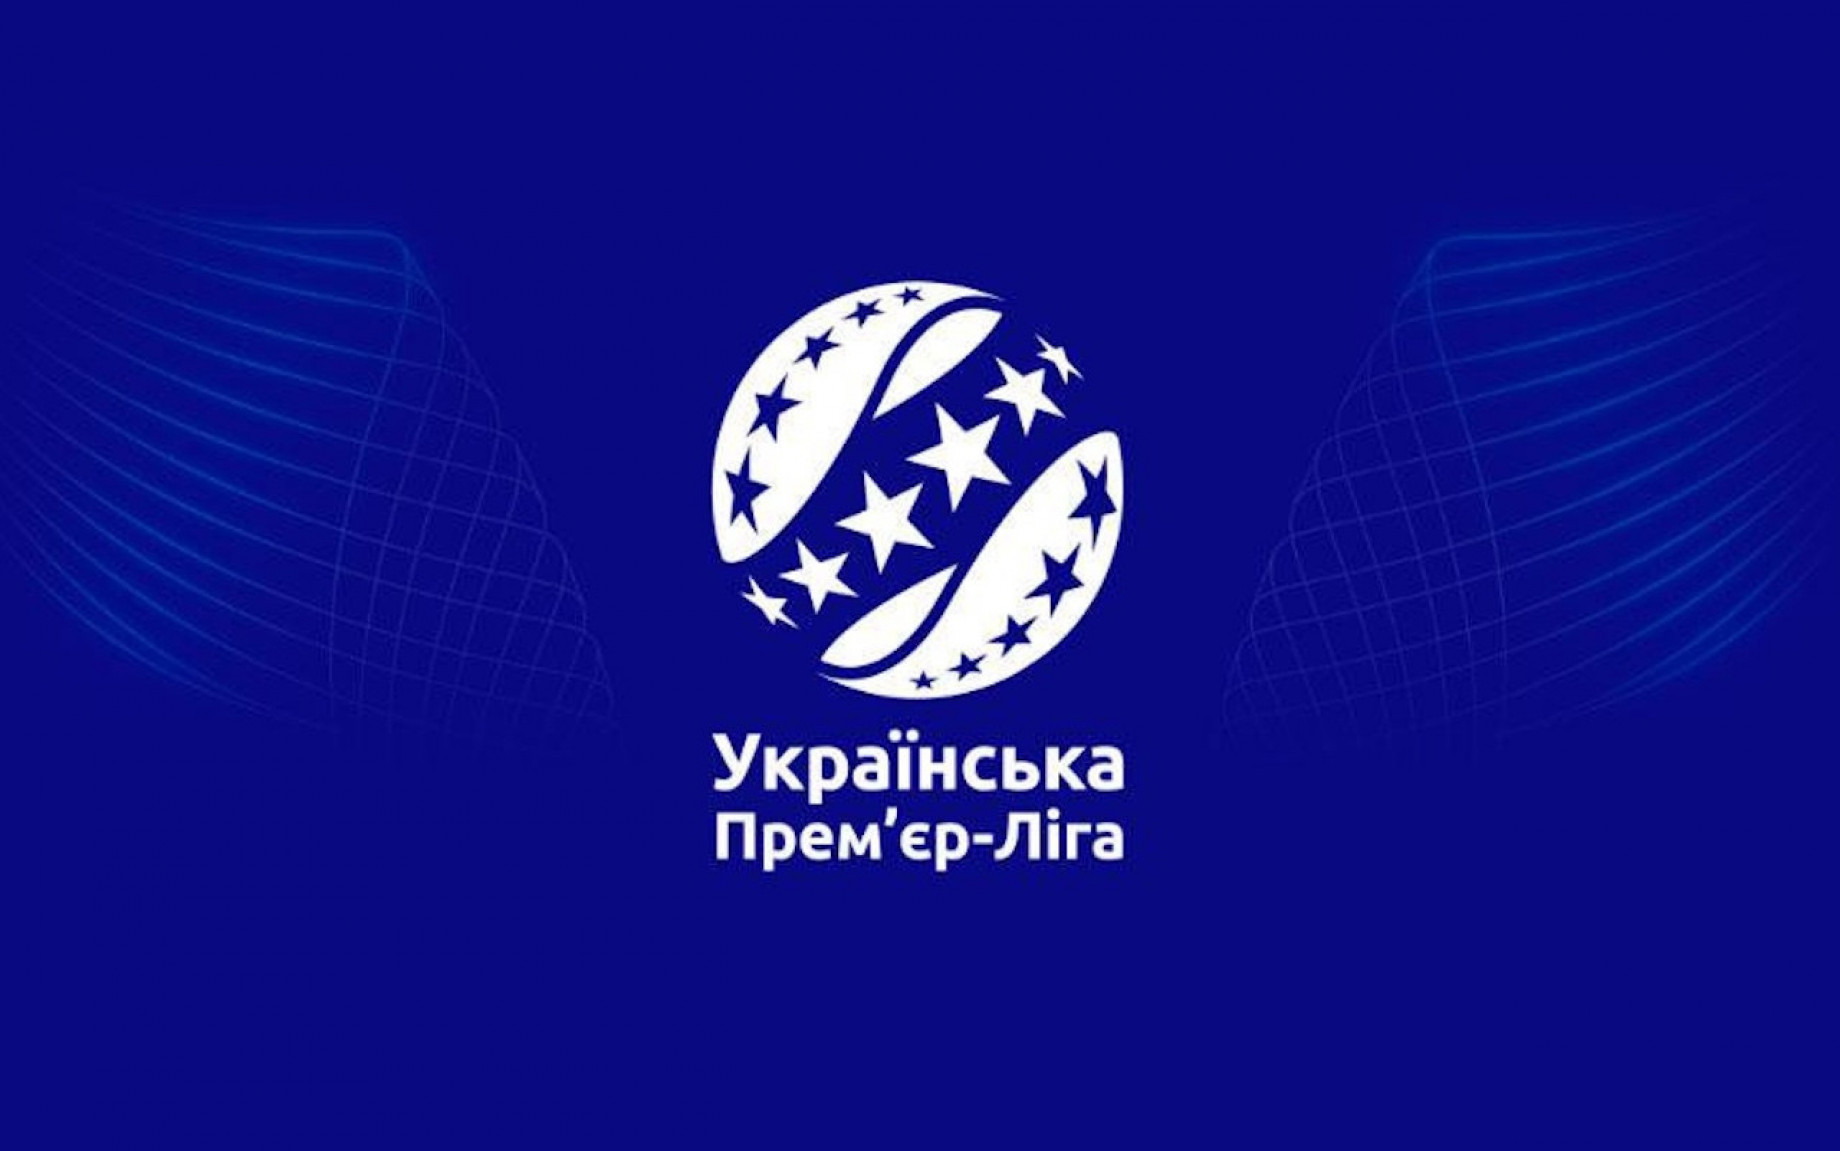 ucraina-campionato-logo-gpo.jpg